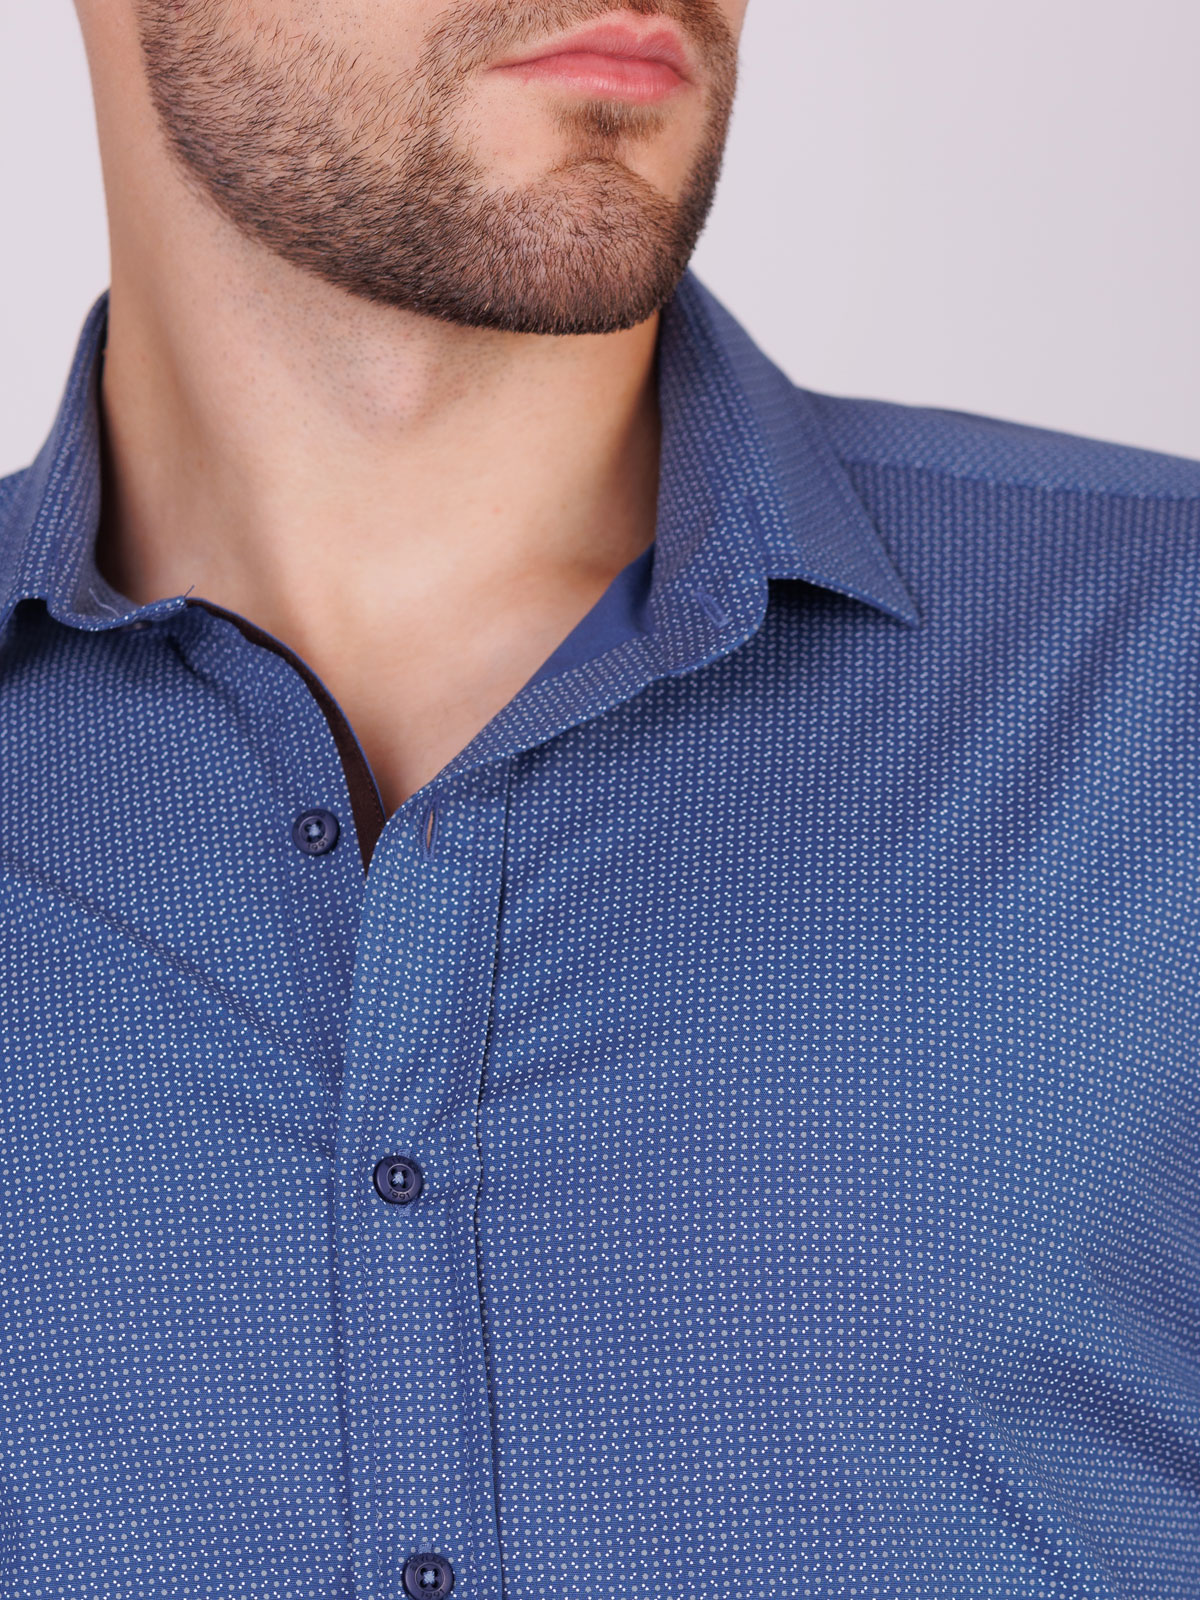 Elegant shirt in dark blue max - 21581 € 44.43 img3